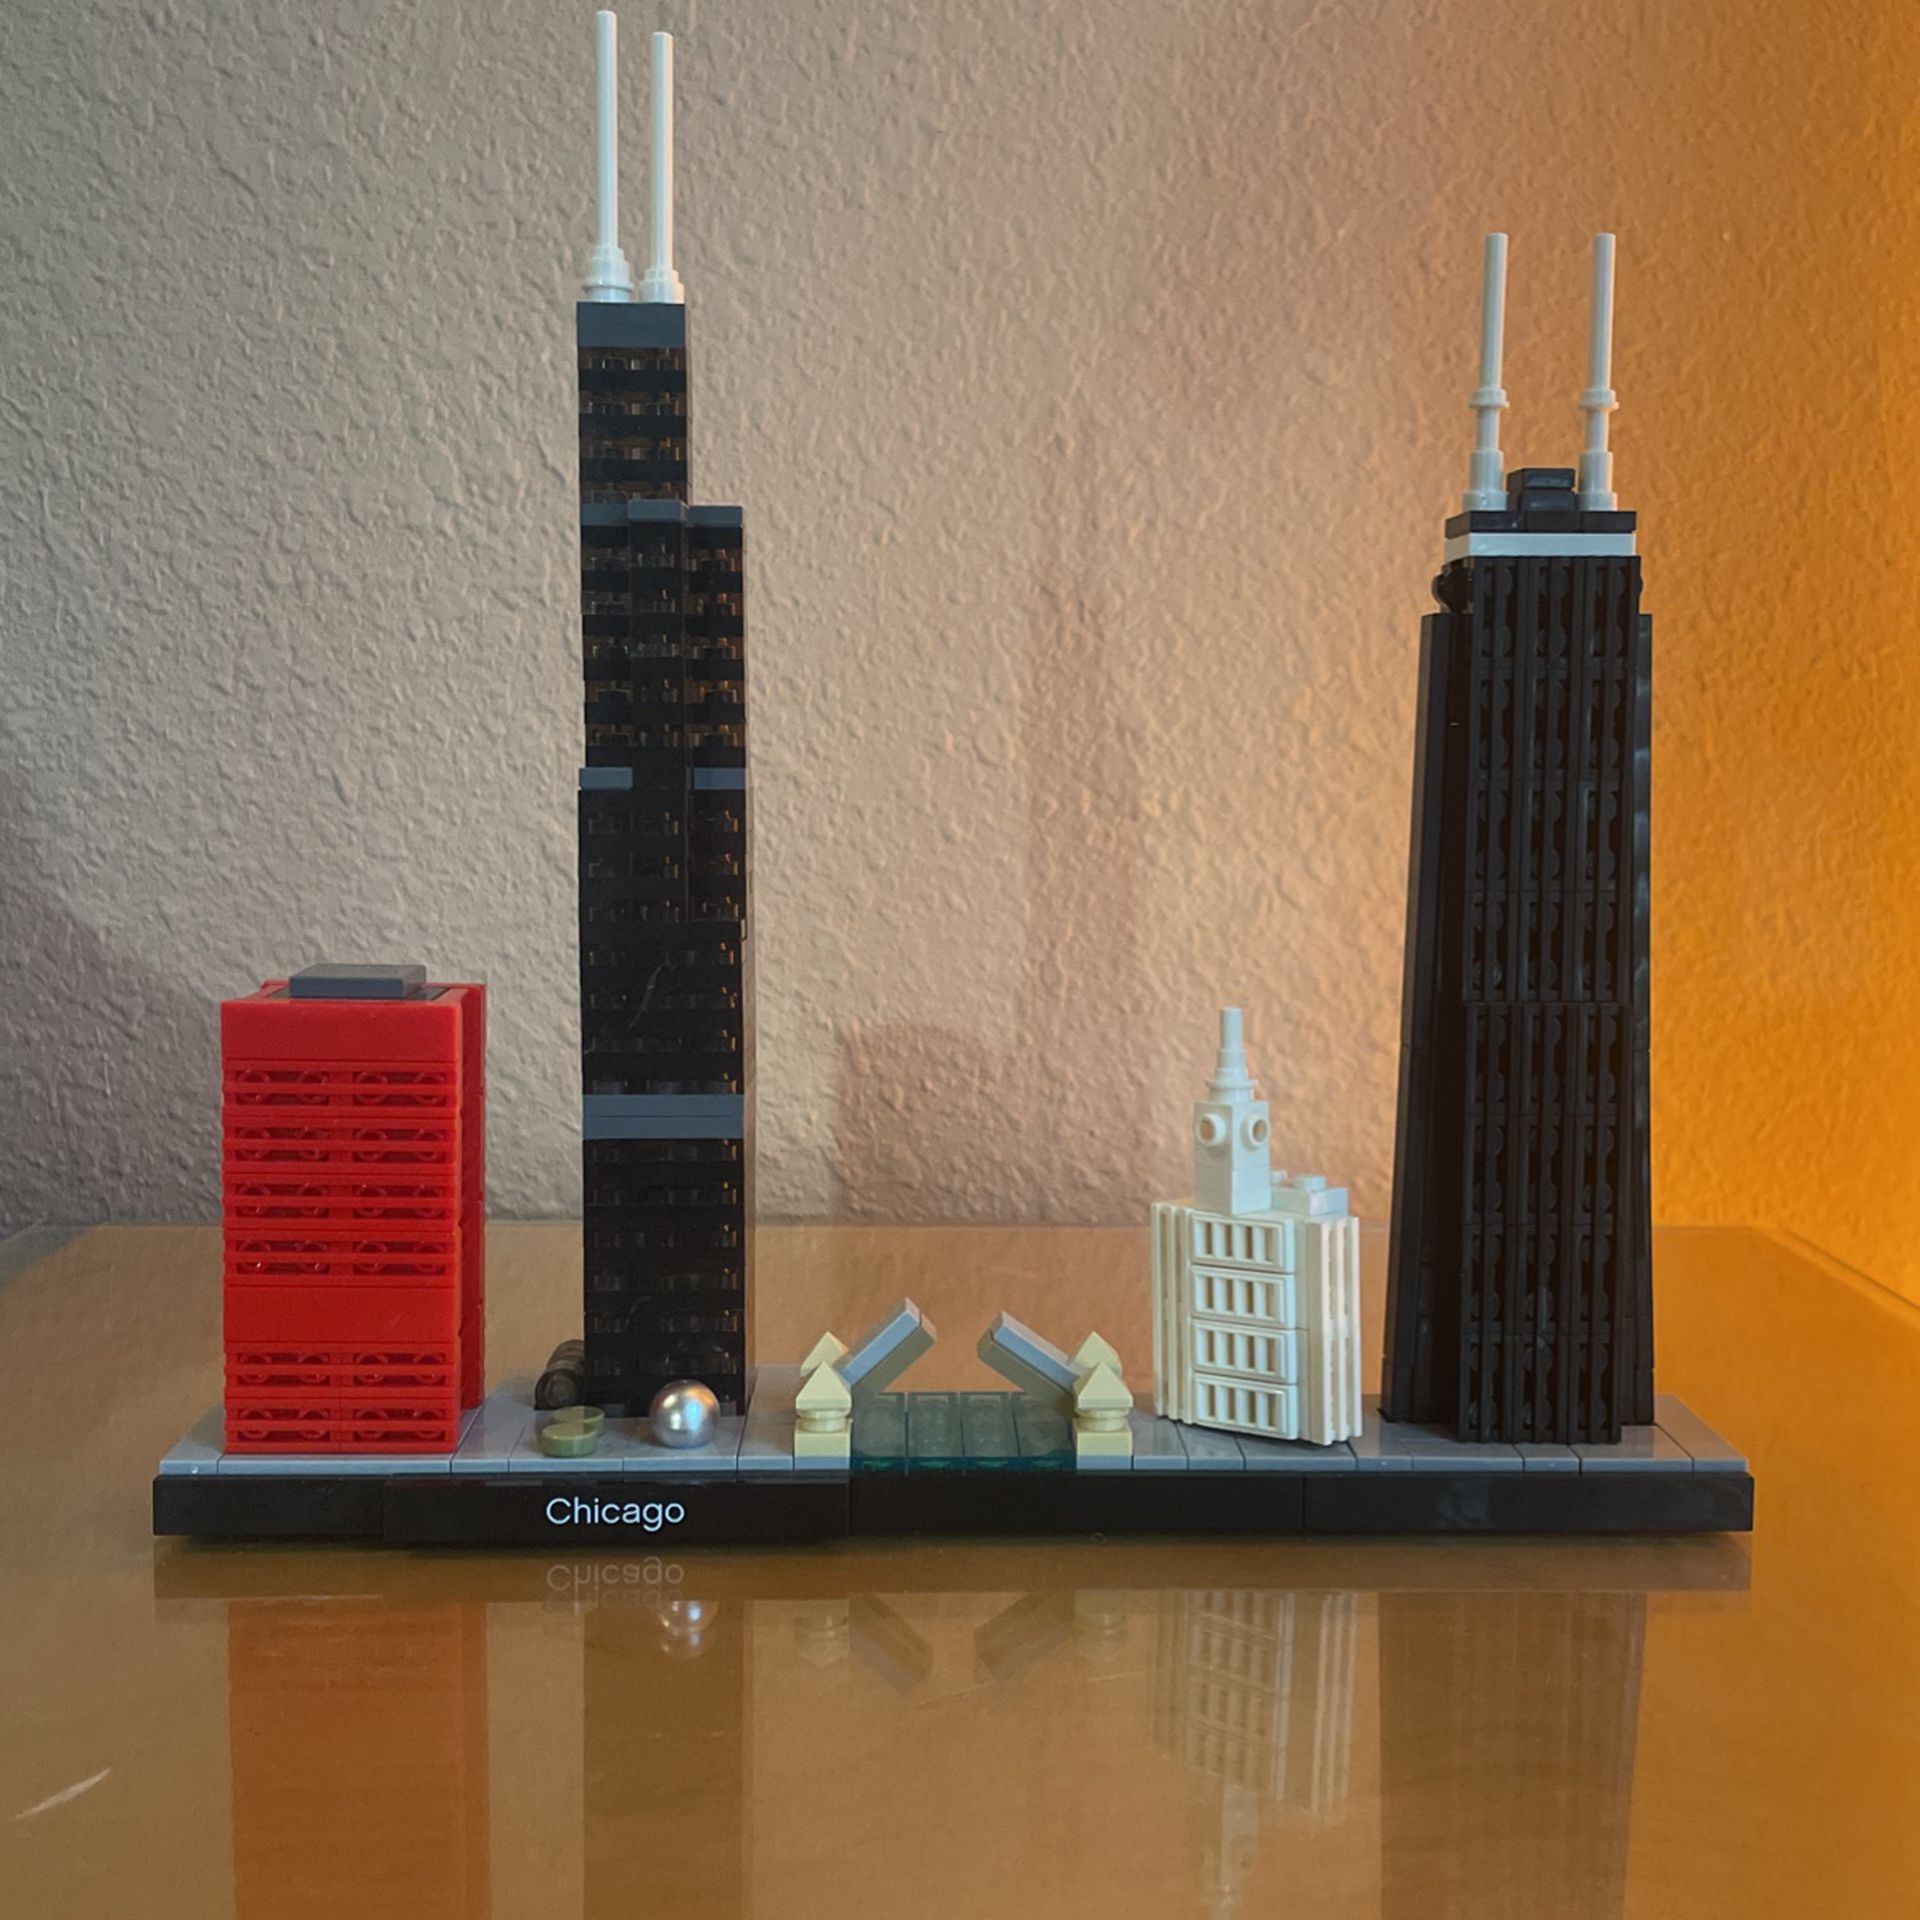 Lego Architecture Chicago - 21033